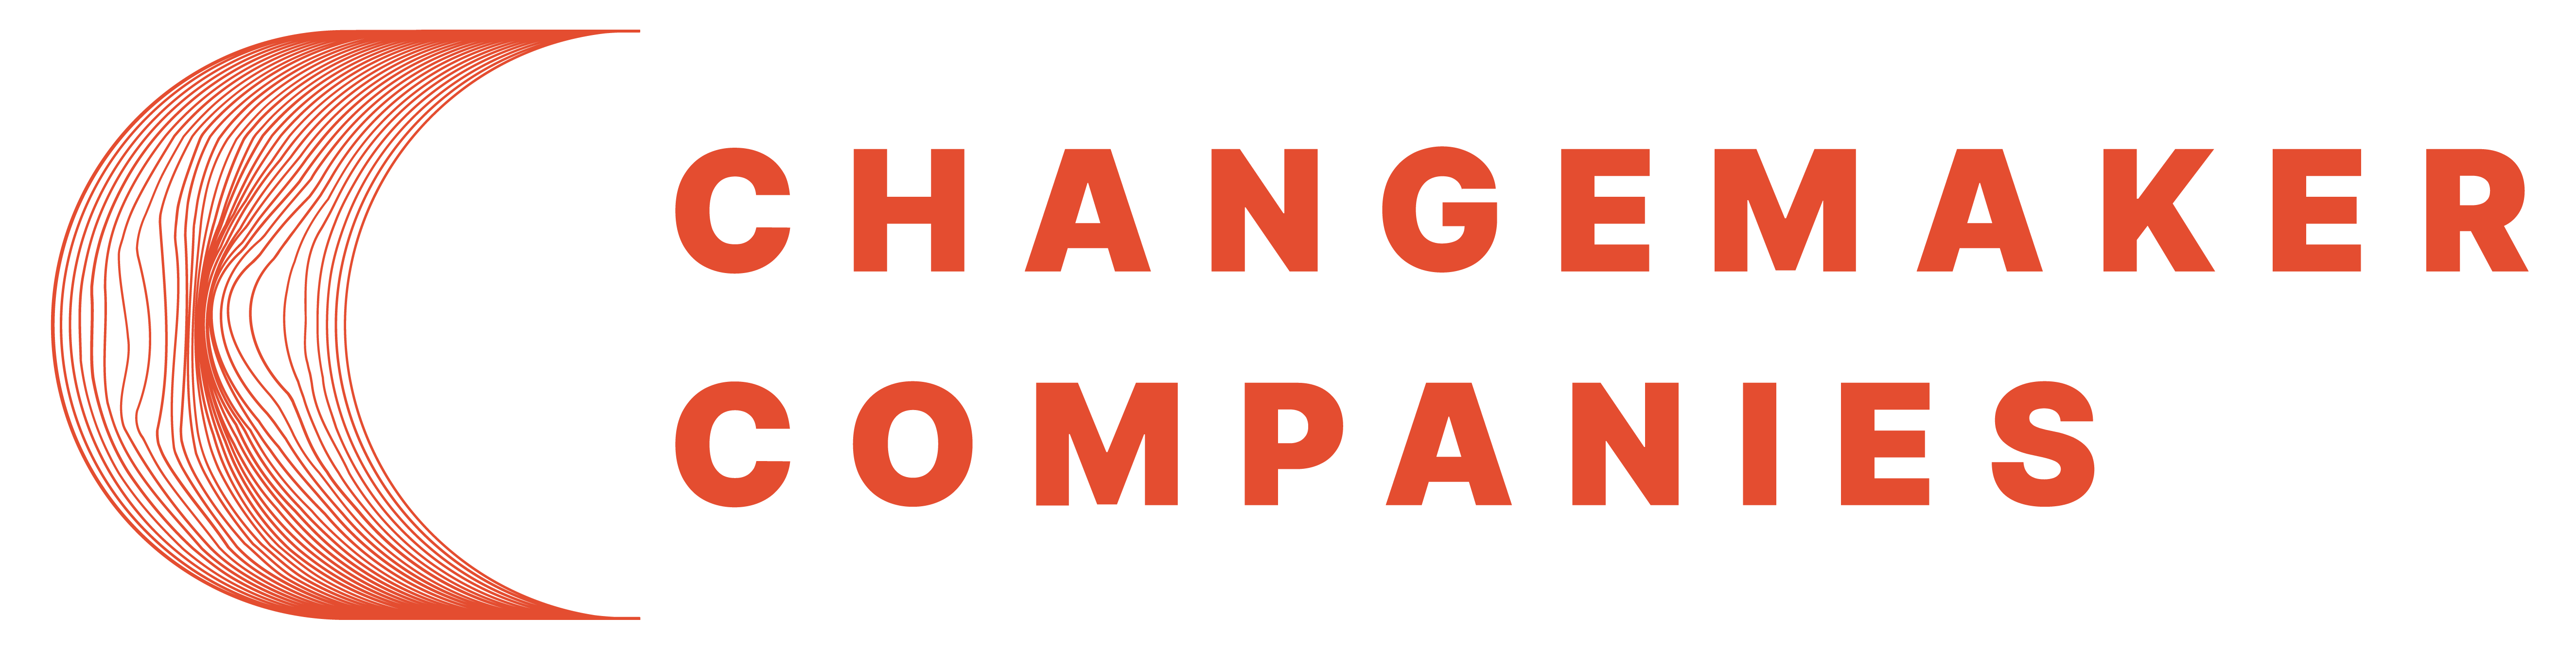 Changemaker Companies